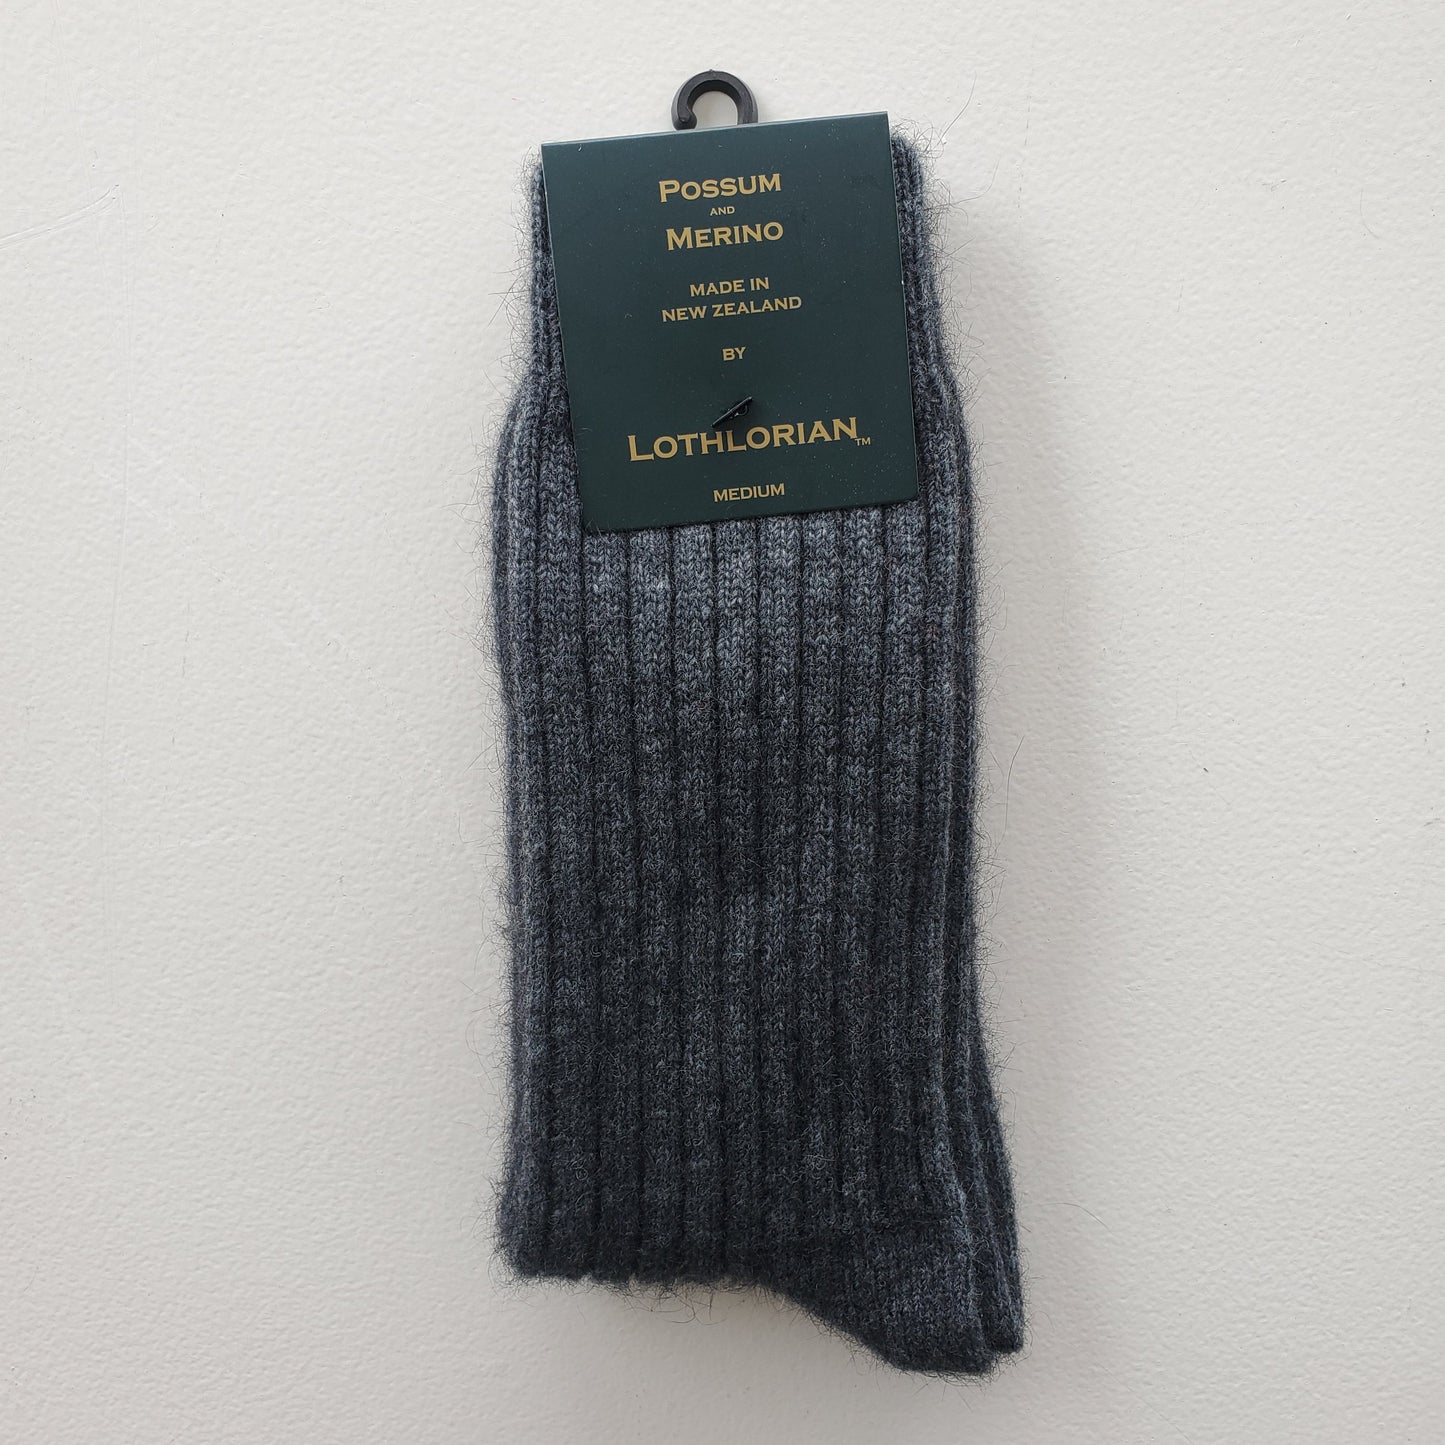 Possum Rib Socks - Medium